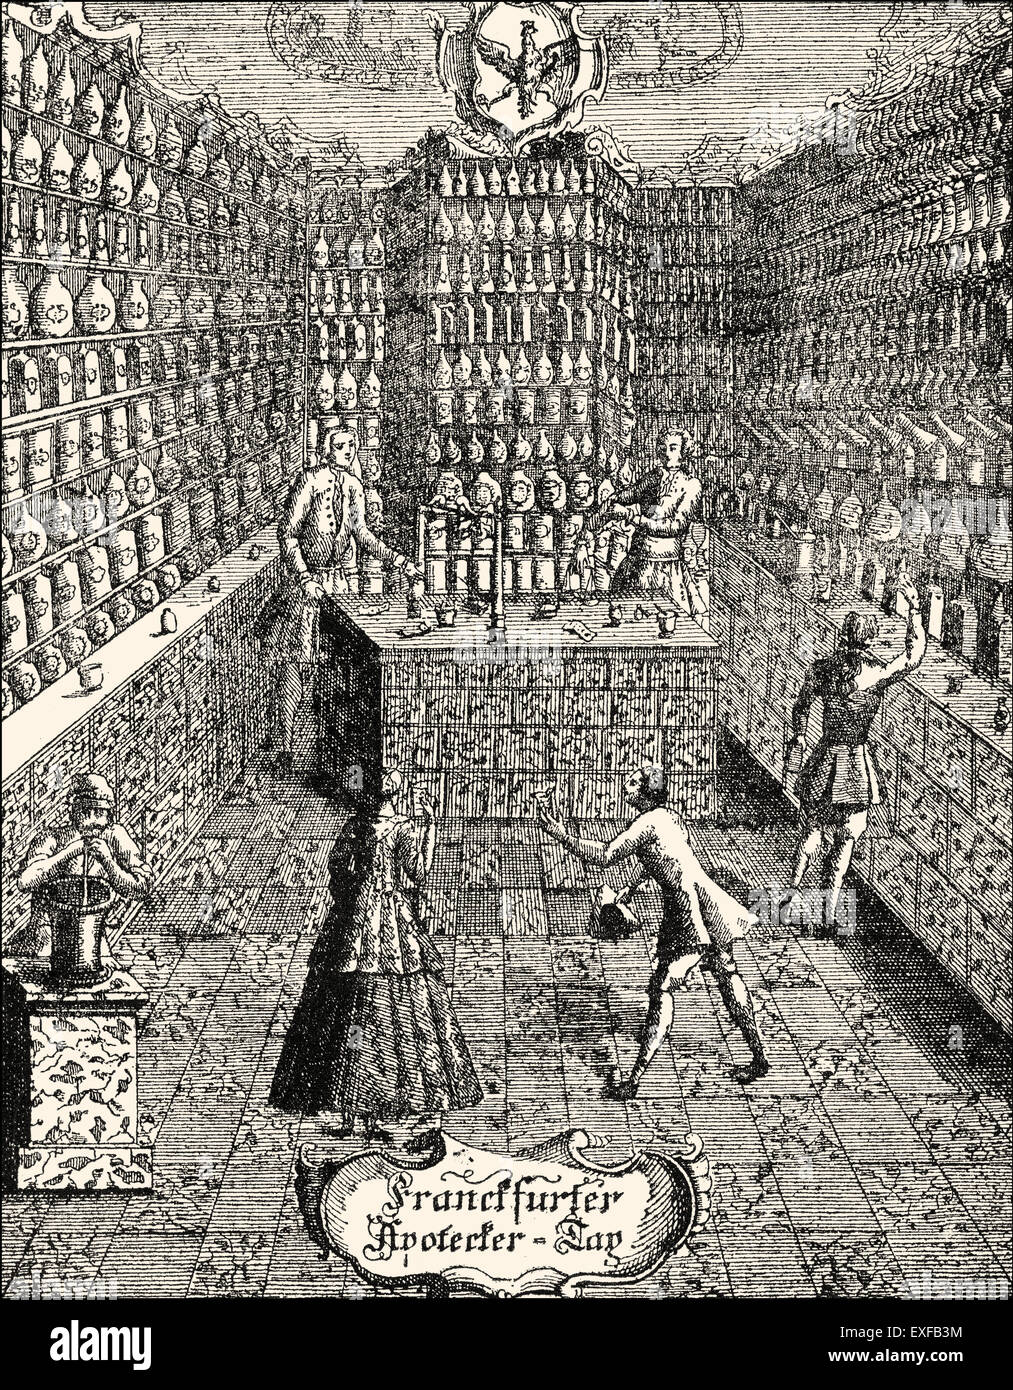 Old pharmacy, Frankfurt, Germany, 1668, Stock Photo